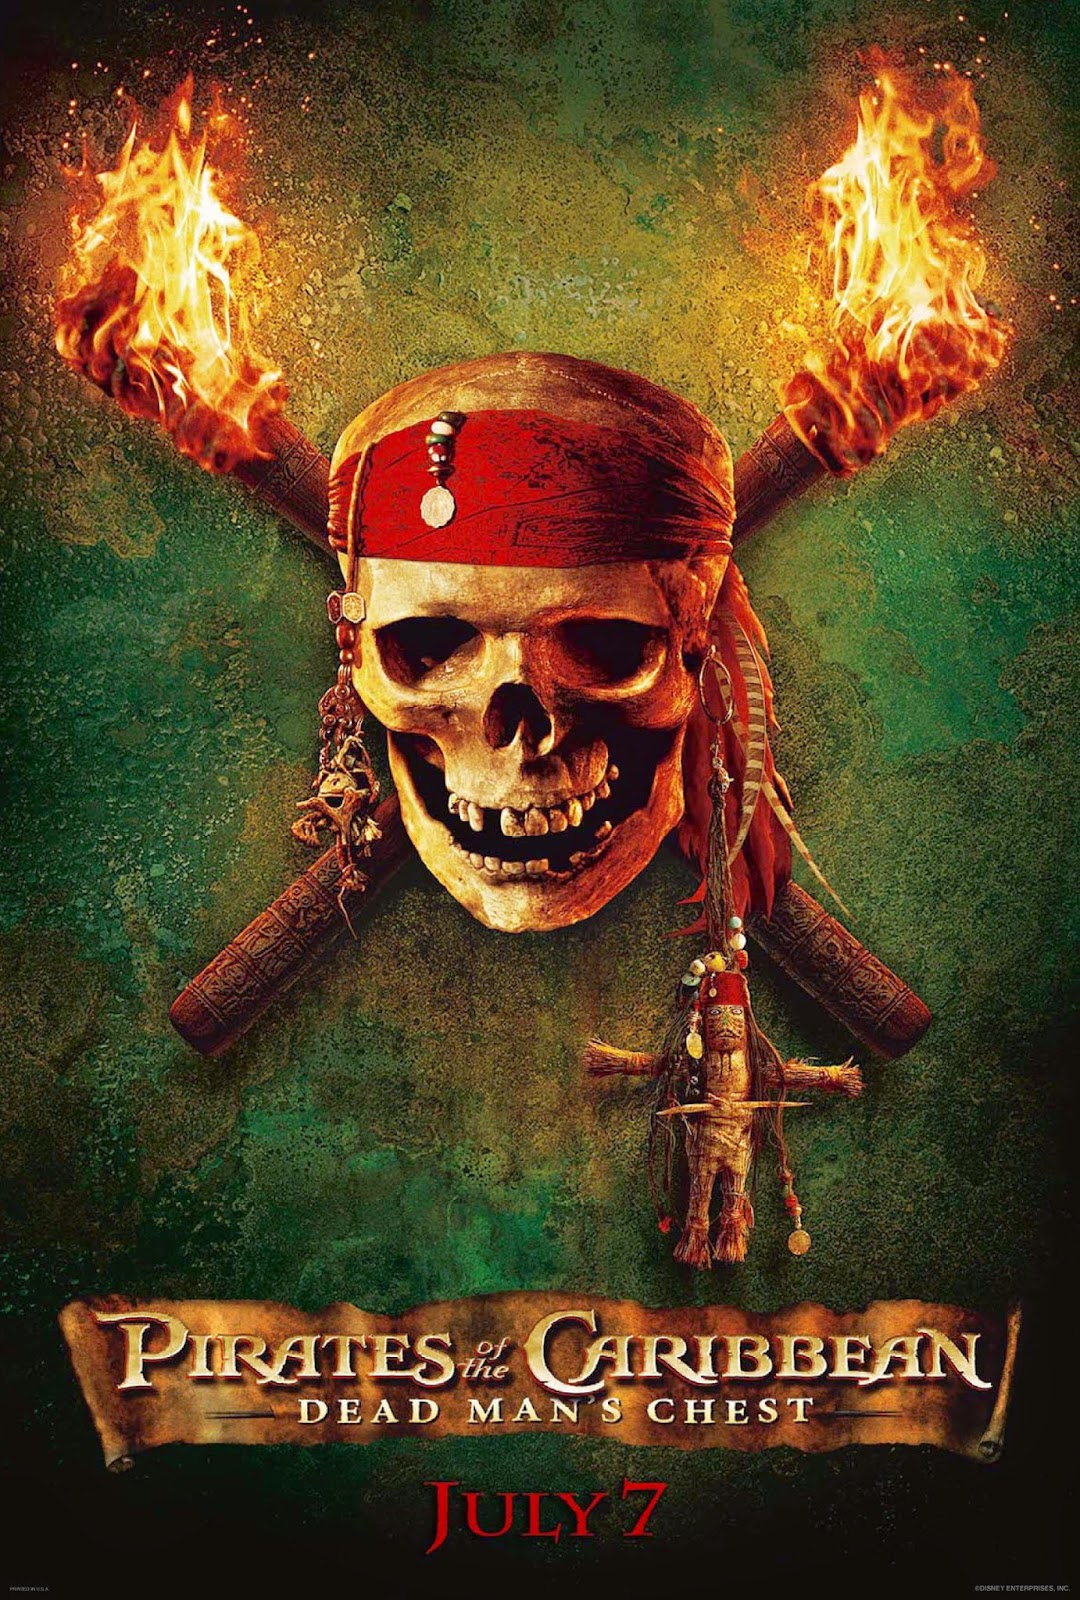  Pirates of the Caribbean: At World's End [Blu-ray] : Johnny  Depp, Orlando Bloom, Keira Knightley, Stellan Skarsgard, Bill Nighy, Chow  Yun-Fat, Geoffrey Rush, Jack Davenport, Kevin R. McNally, Jonathan Pryce,  Gore